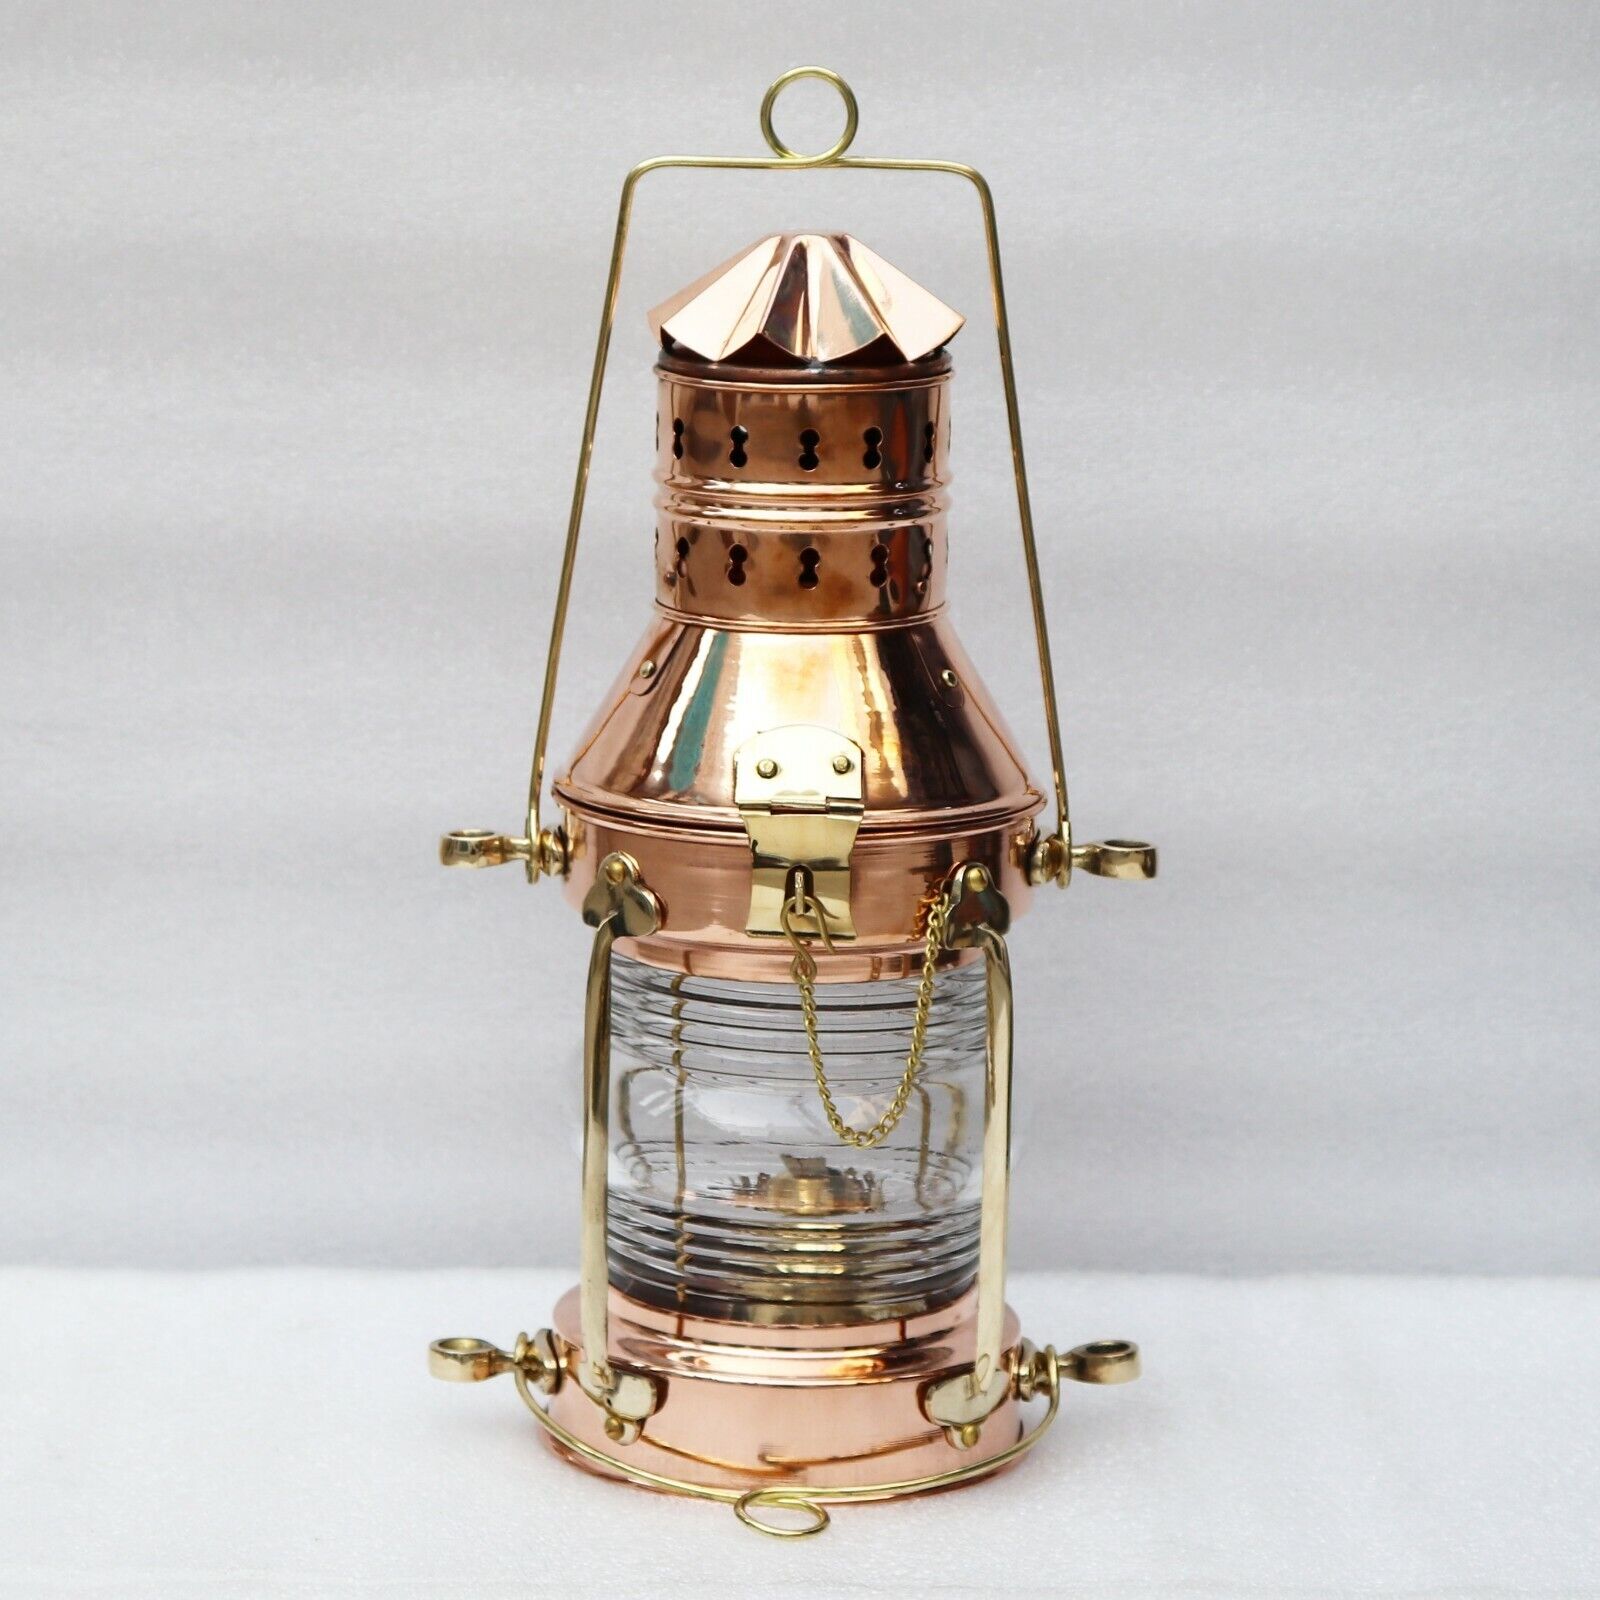 Antique Brass Copper Ship Oil Lantern Hanging Lamp Collectible Decor Item